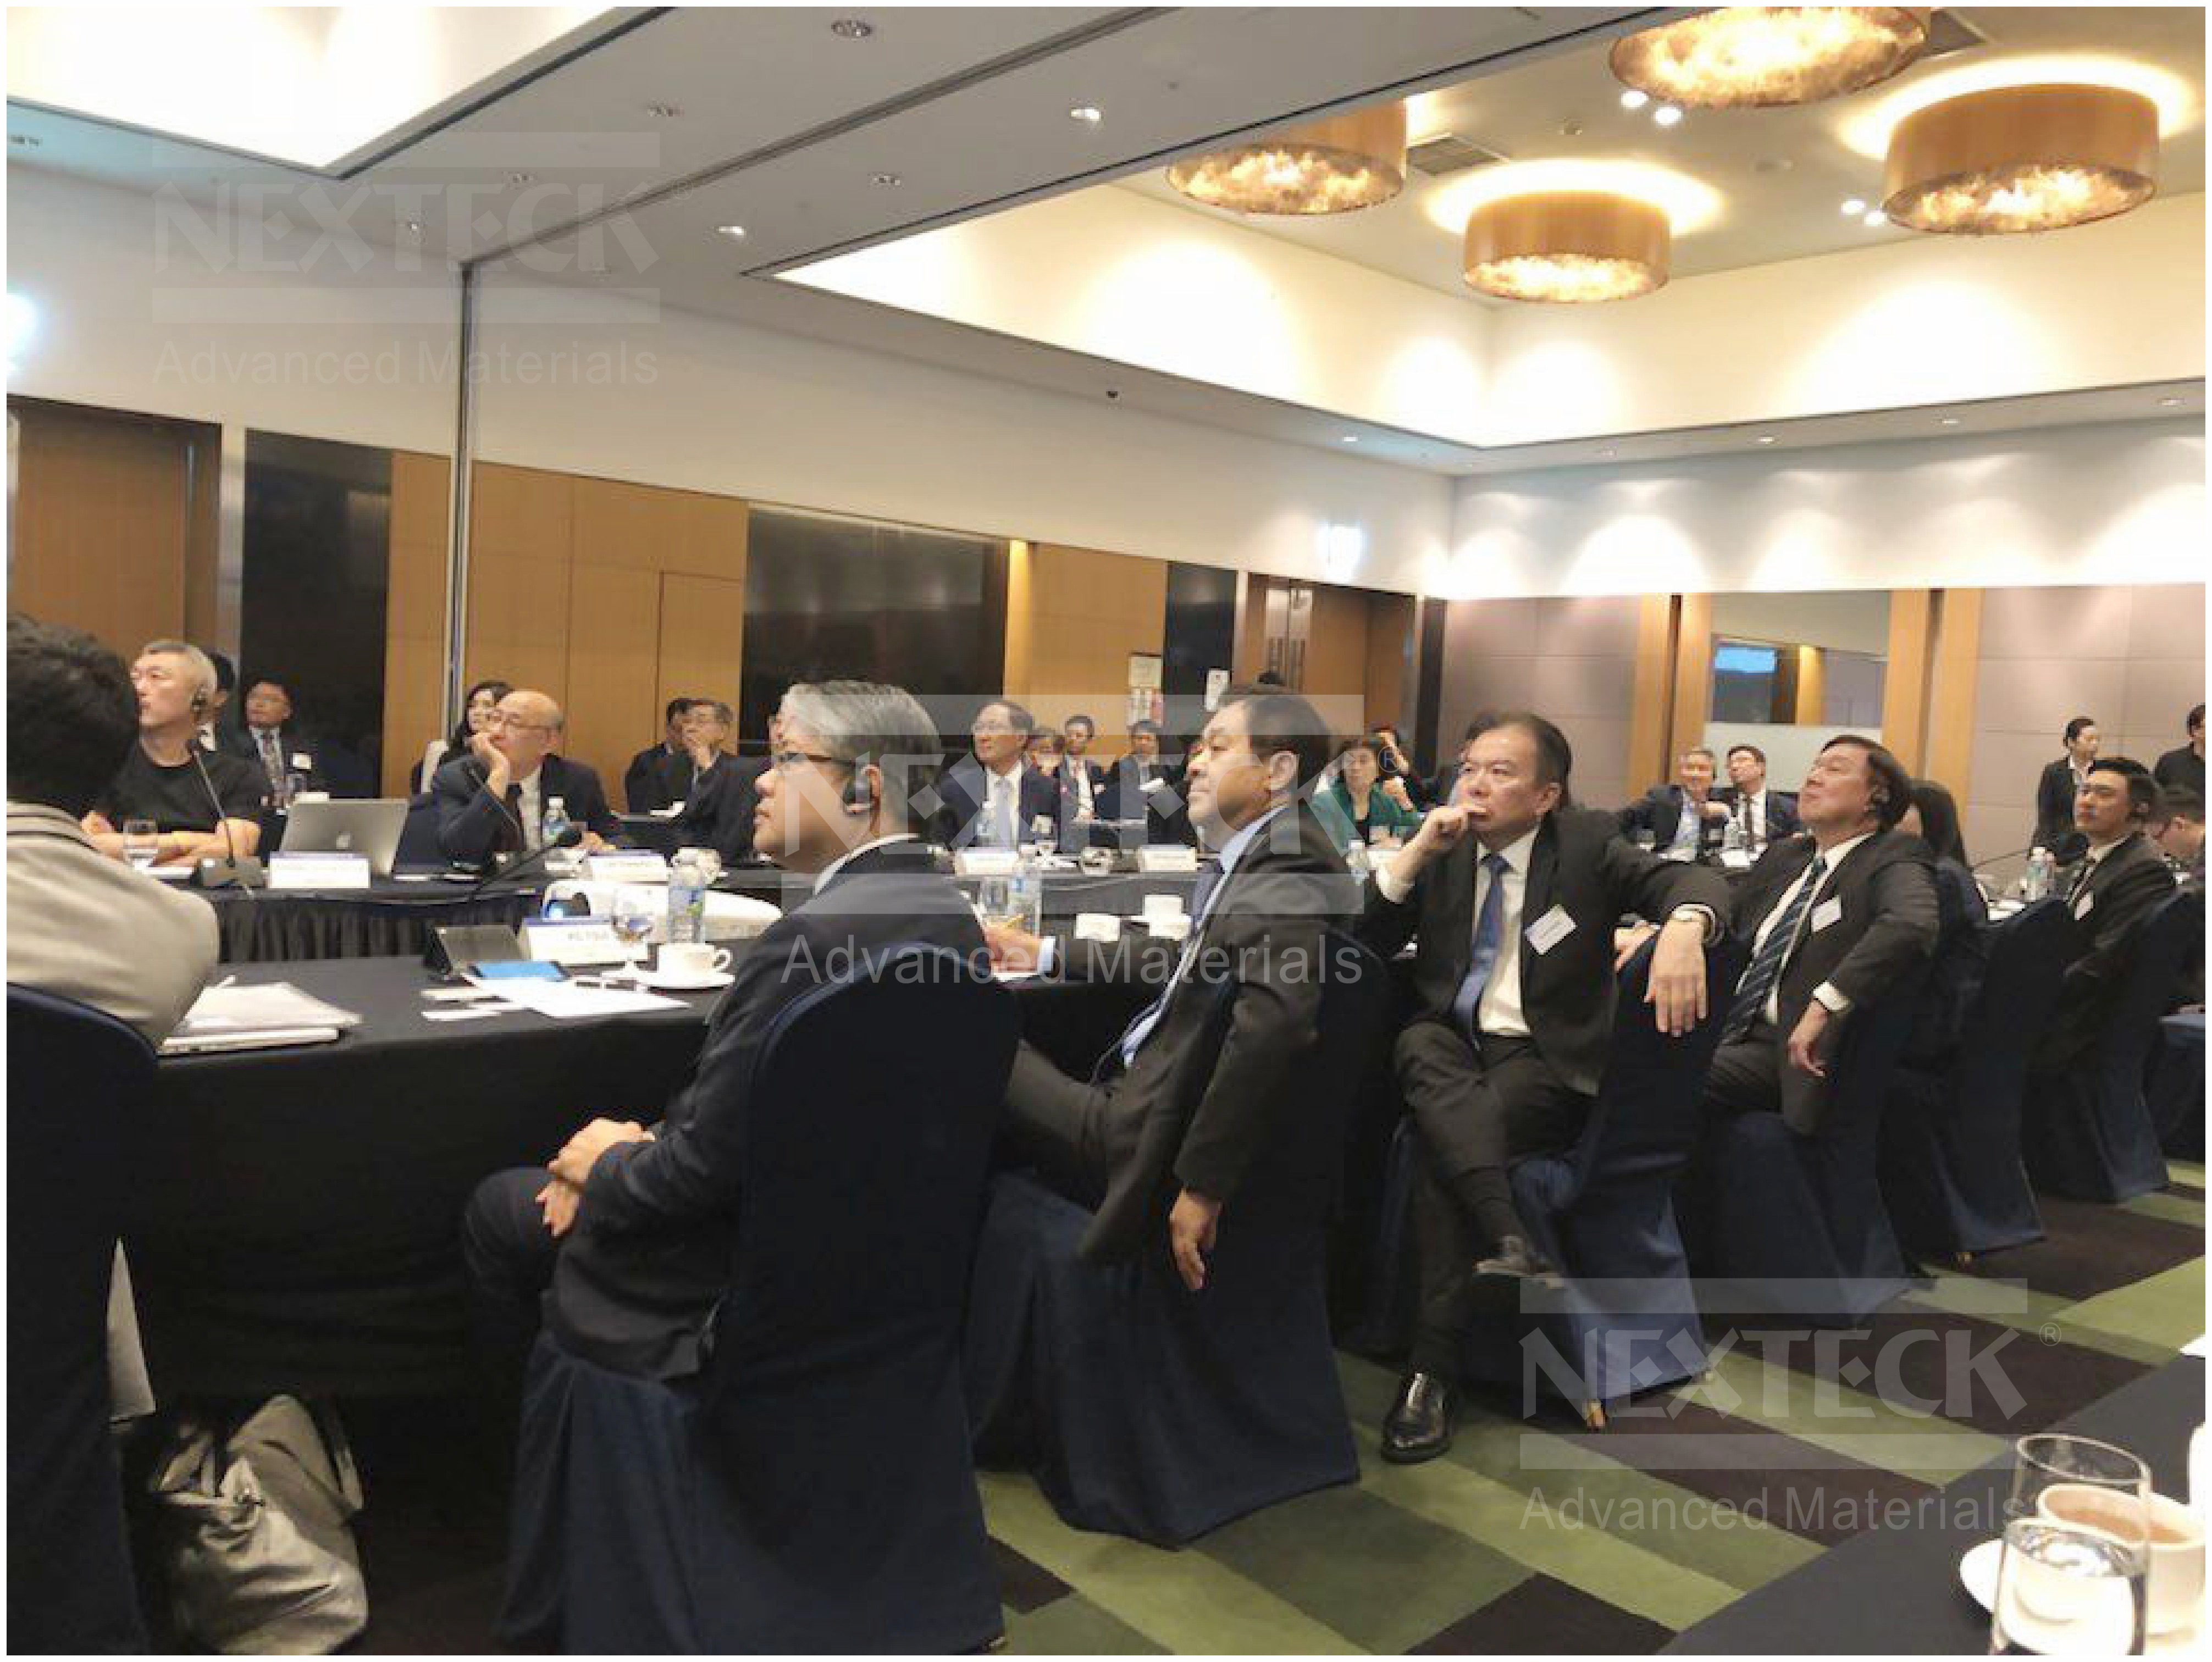 NEXTECK集团参加2018年韩国及香港各大商会工业创新圆桌会议！